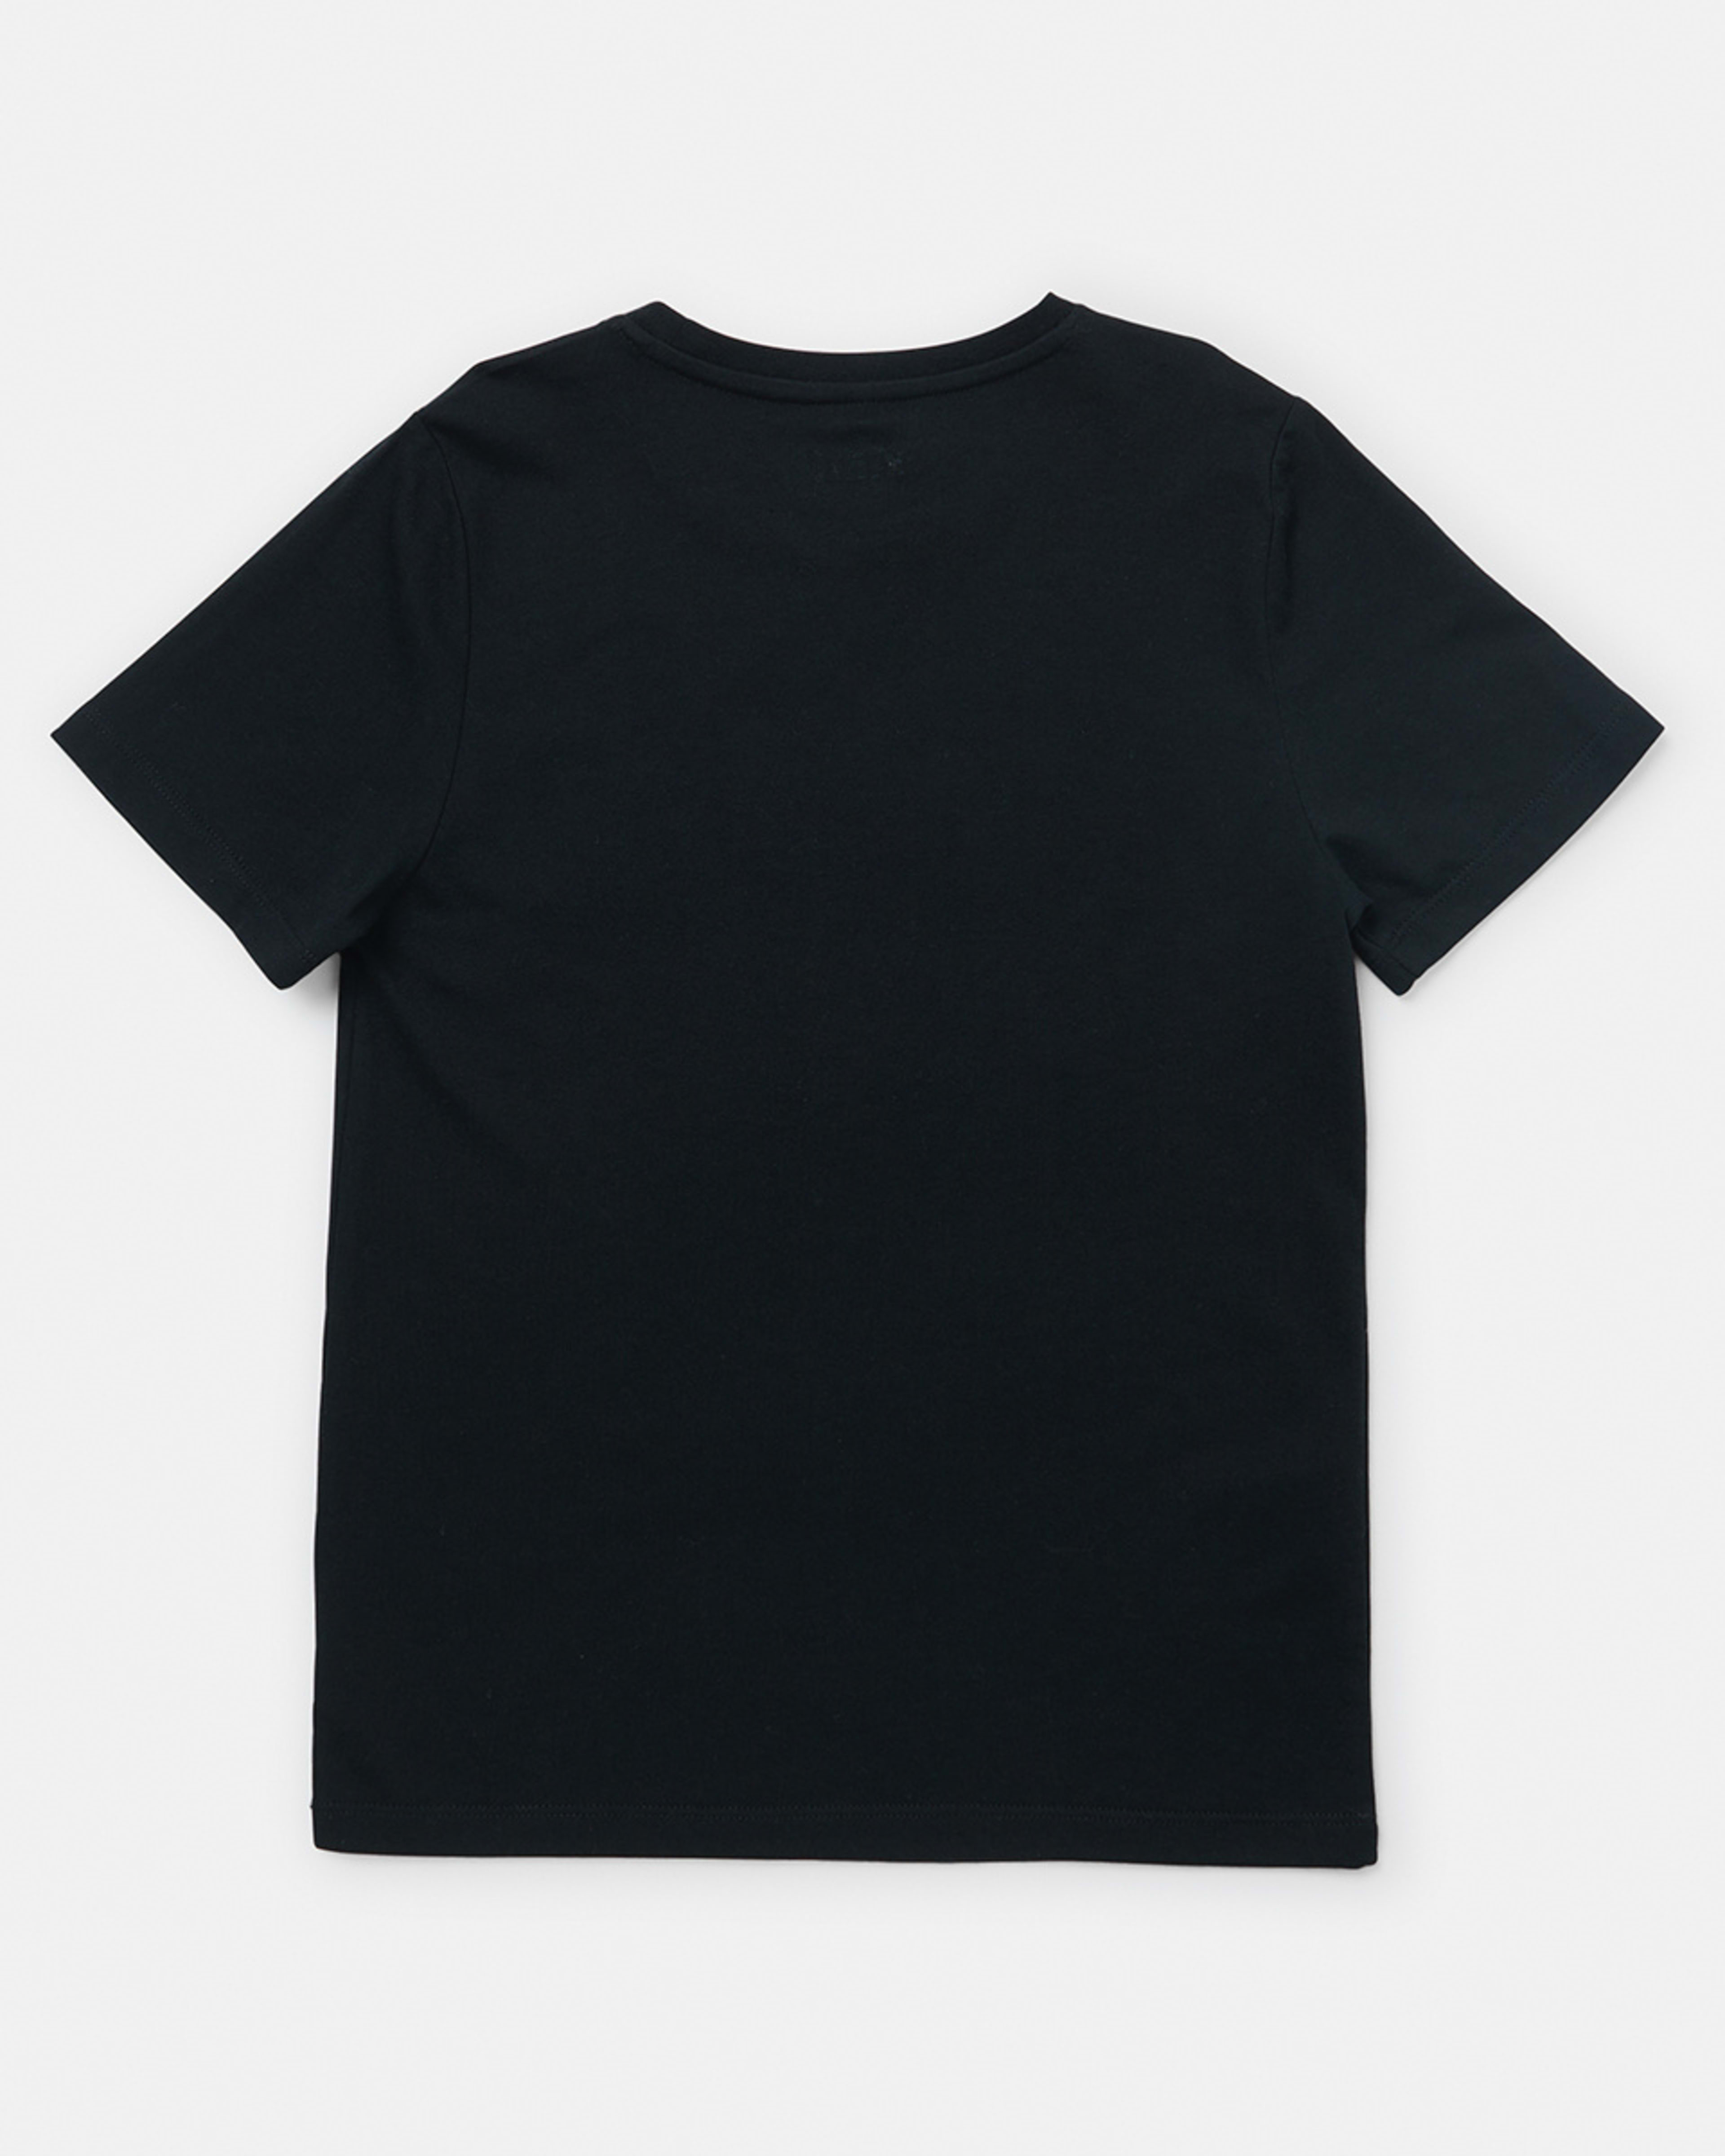 Fortnite License T-shirt - Kmart